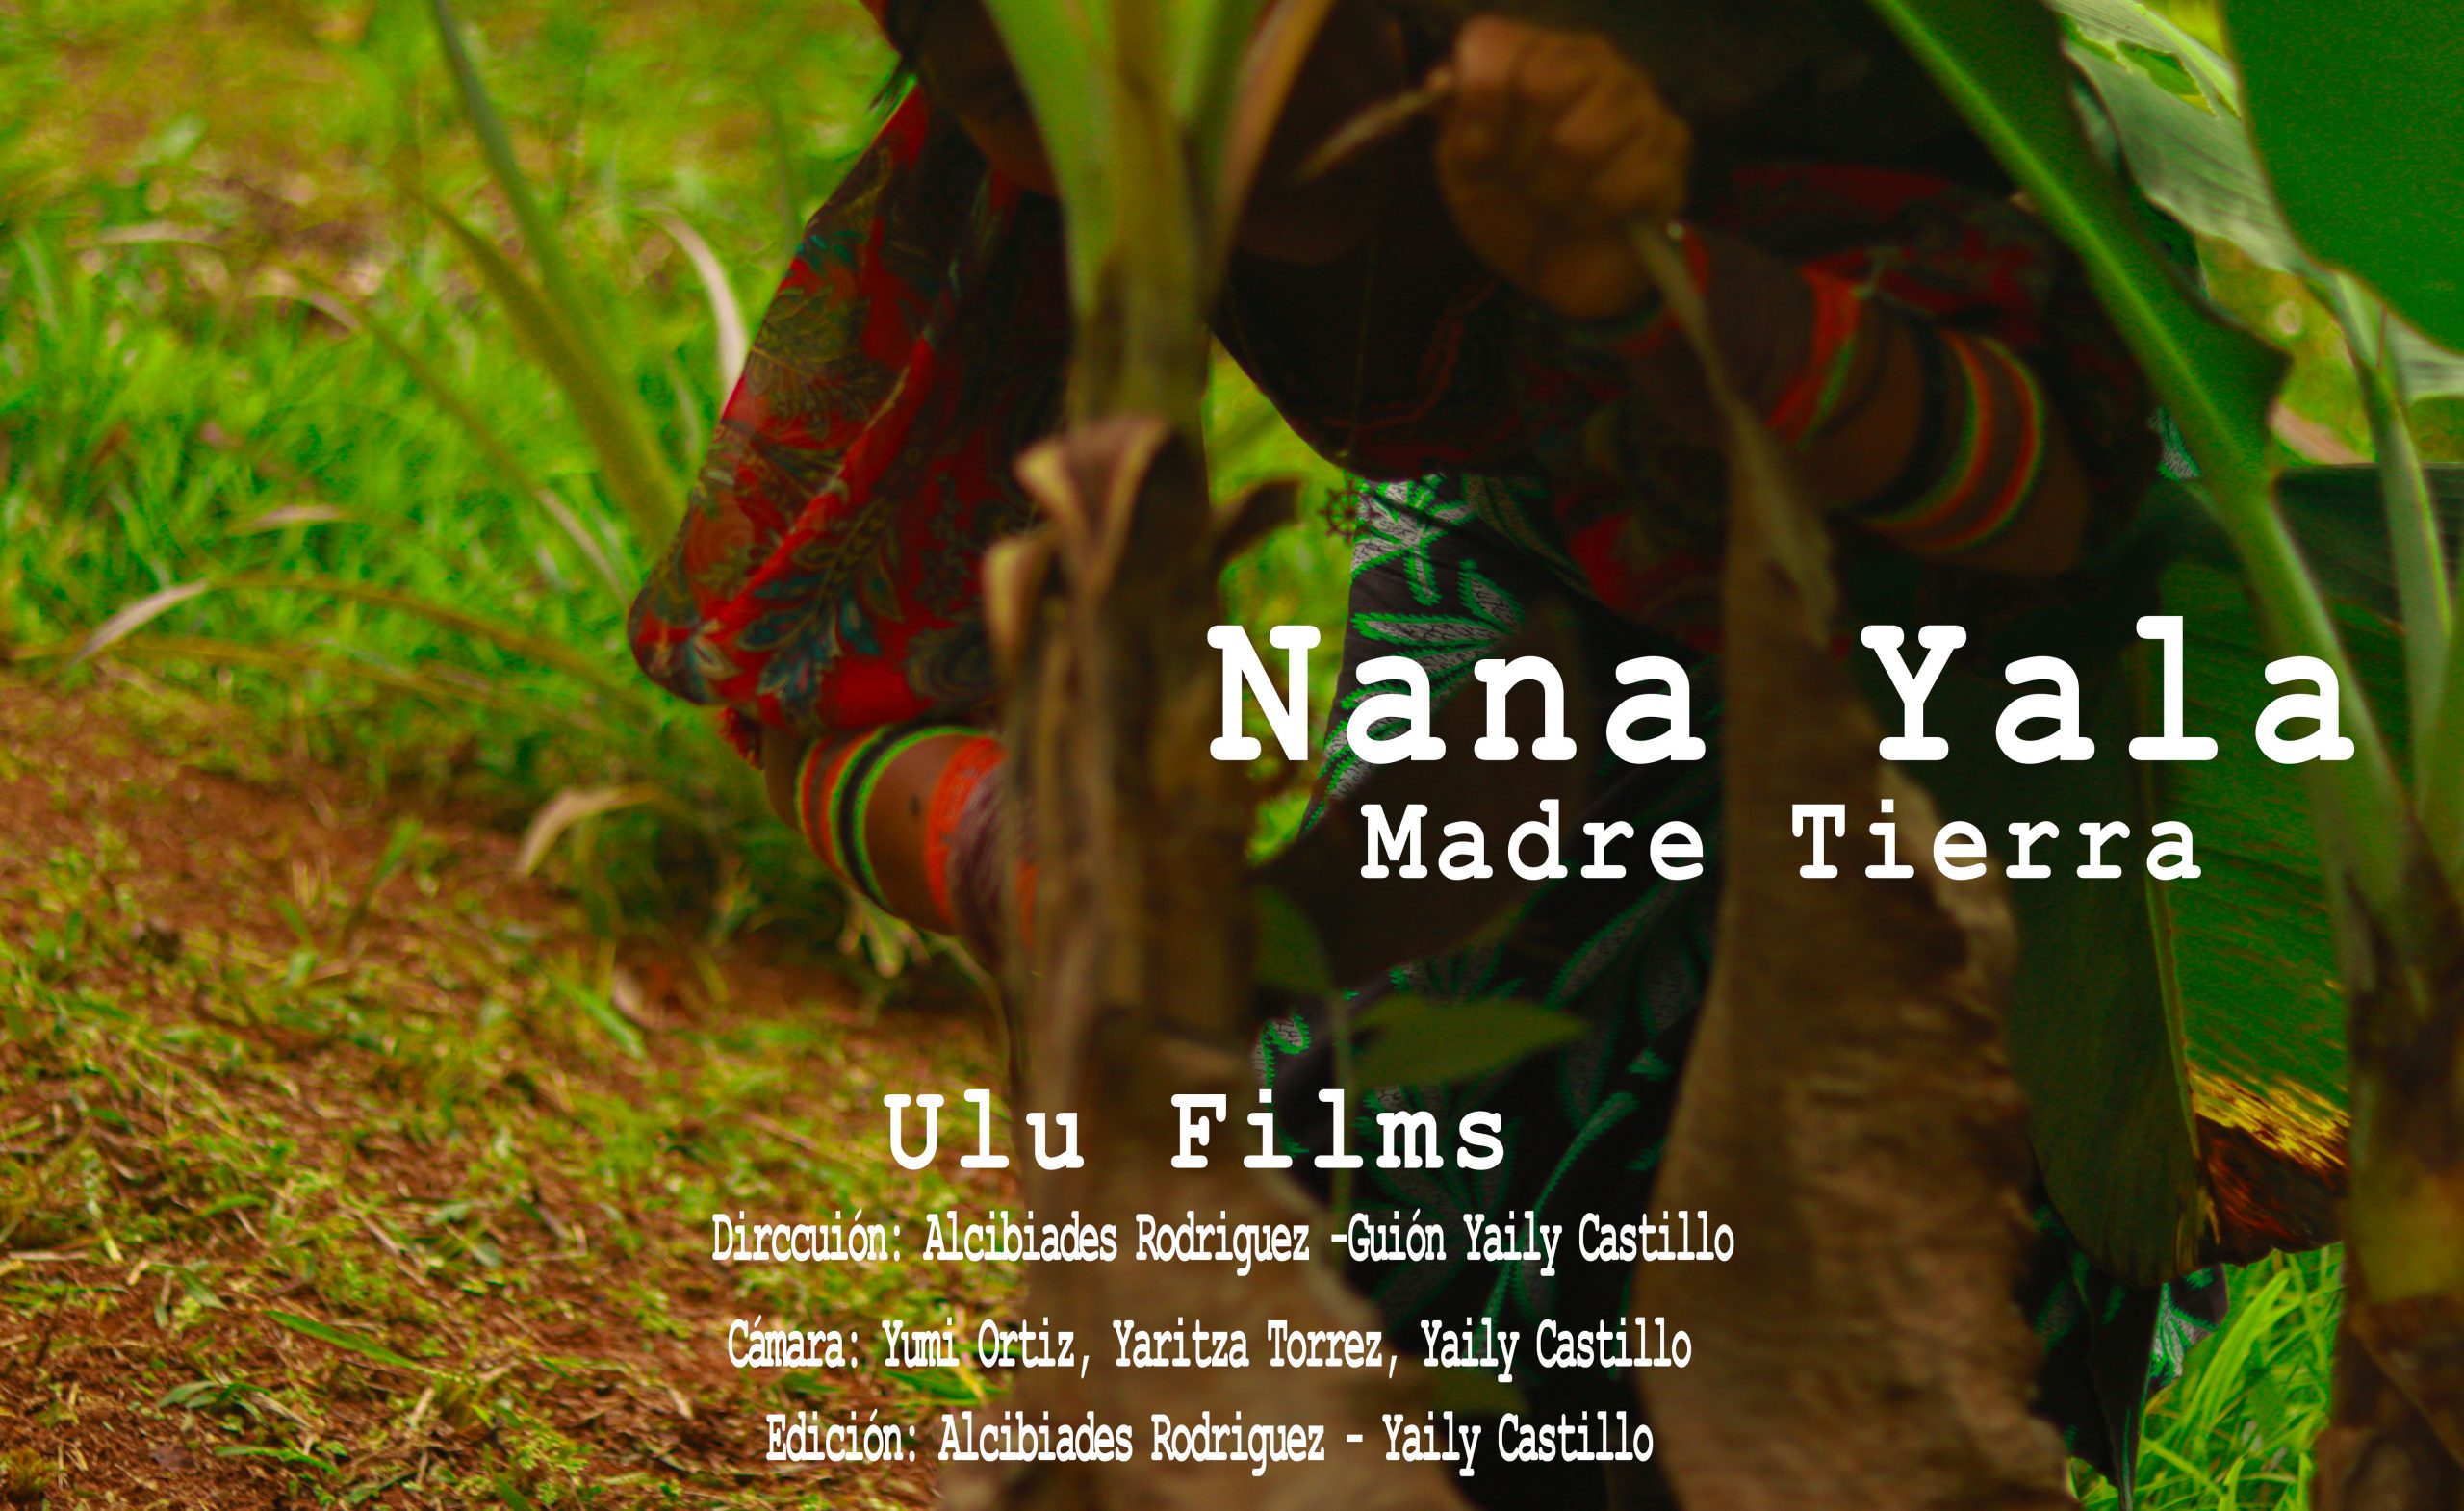 Nana Yala film poster